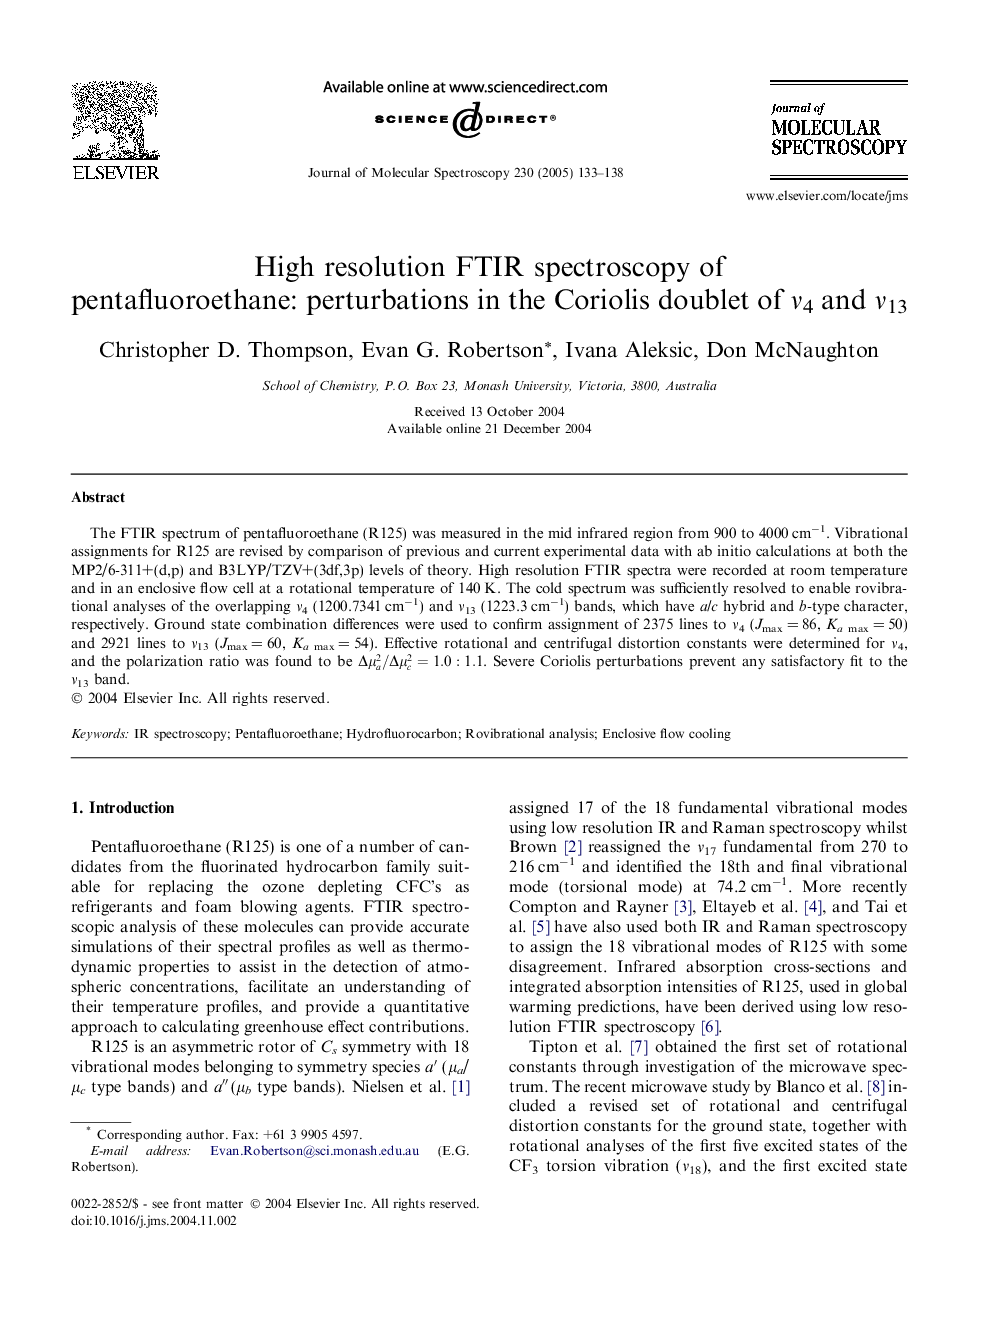 High resolution FTIR spectroscopy of pentafluoroethane: perturbations in the Coriolis doublet of Î½4 and Î½13